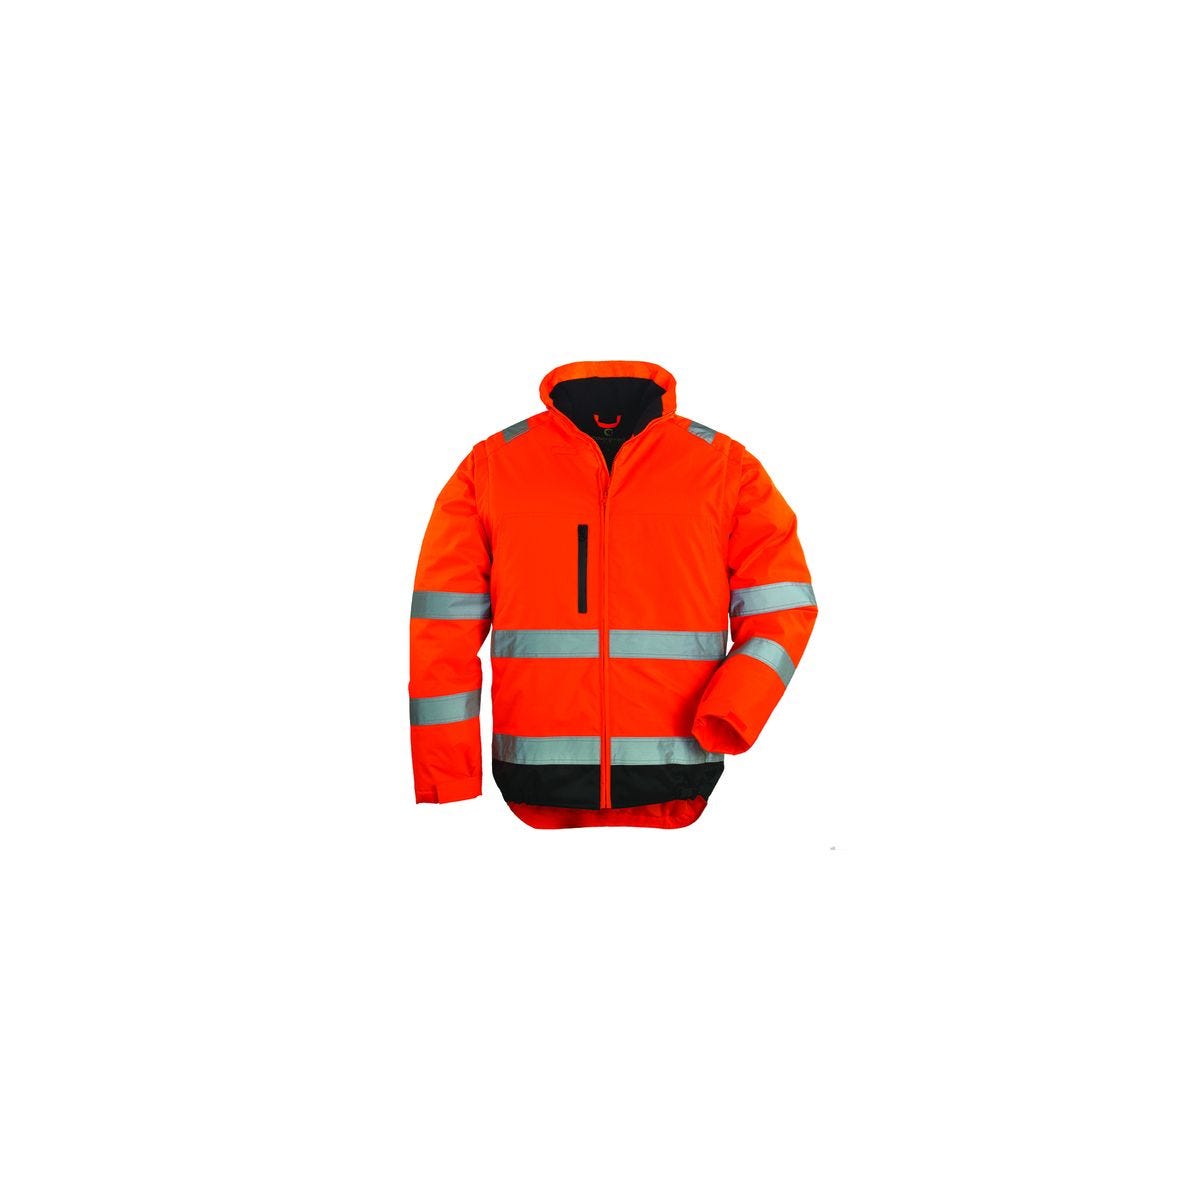 HI-WAY Xtra Veste 2/1, orange HV, Polyester Oxford 300D - COVERGUARD - Taille L 0